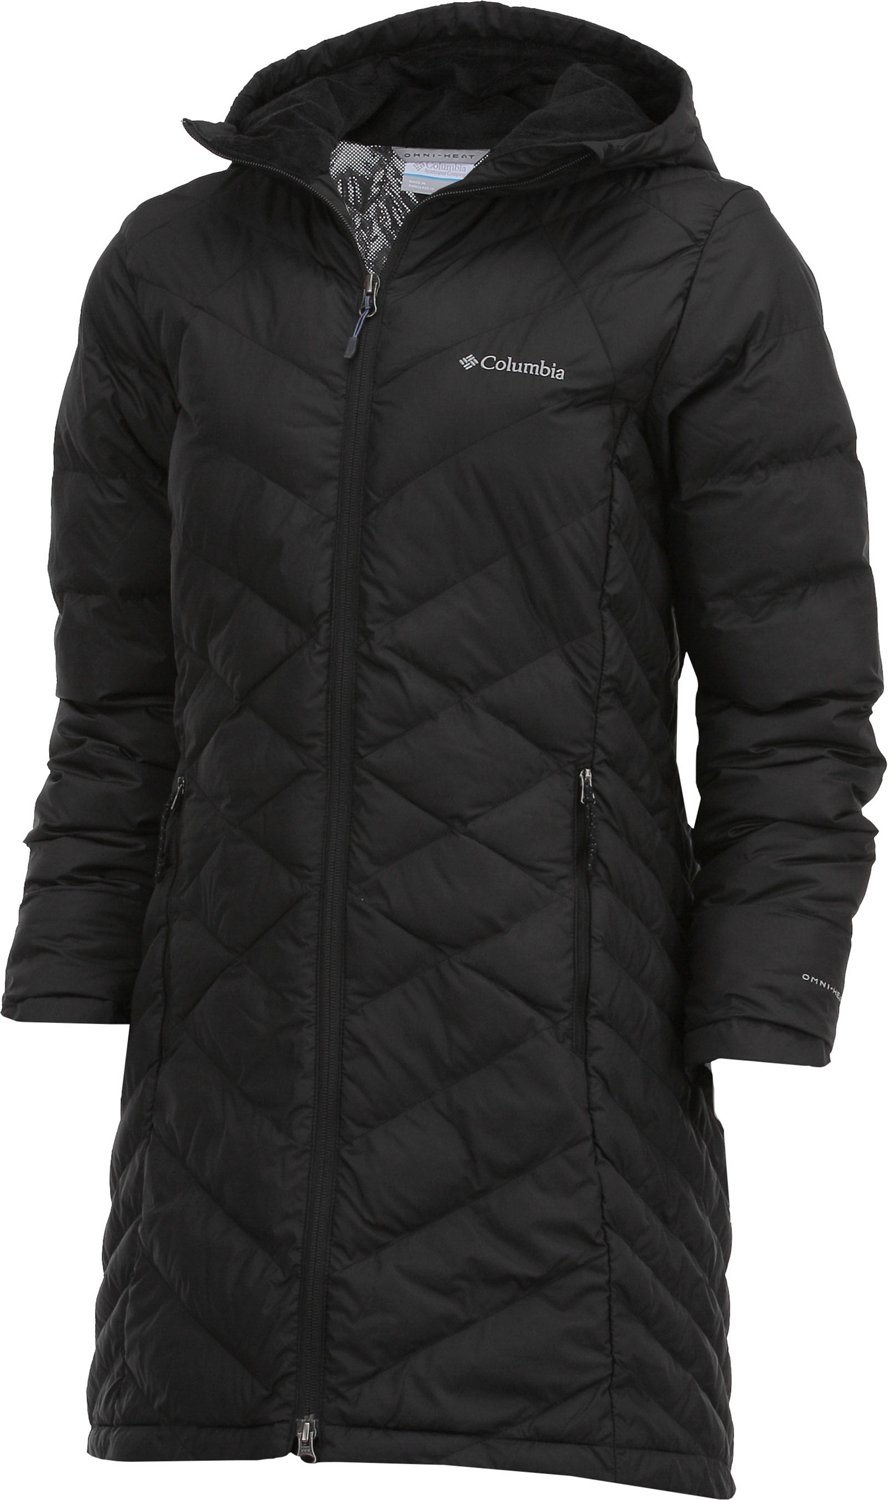 Columbia, Jackets & Coats, Columbia Sportswear Womens Black Dark Gray  Long Sleeve Rain Jacket Size Small